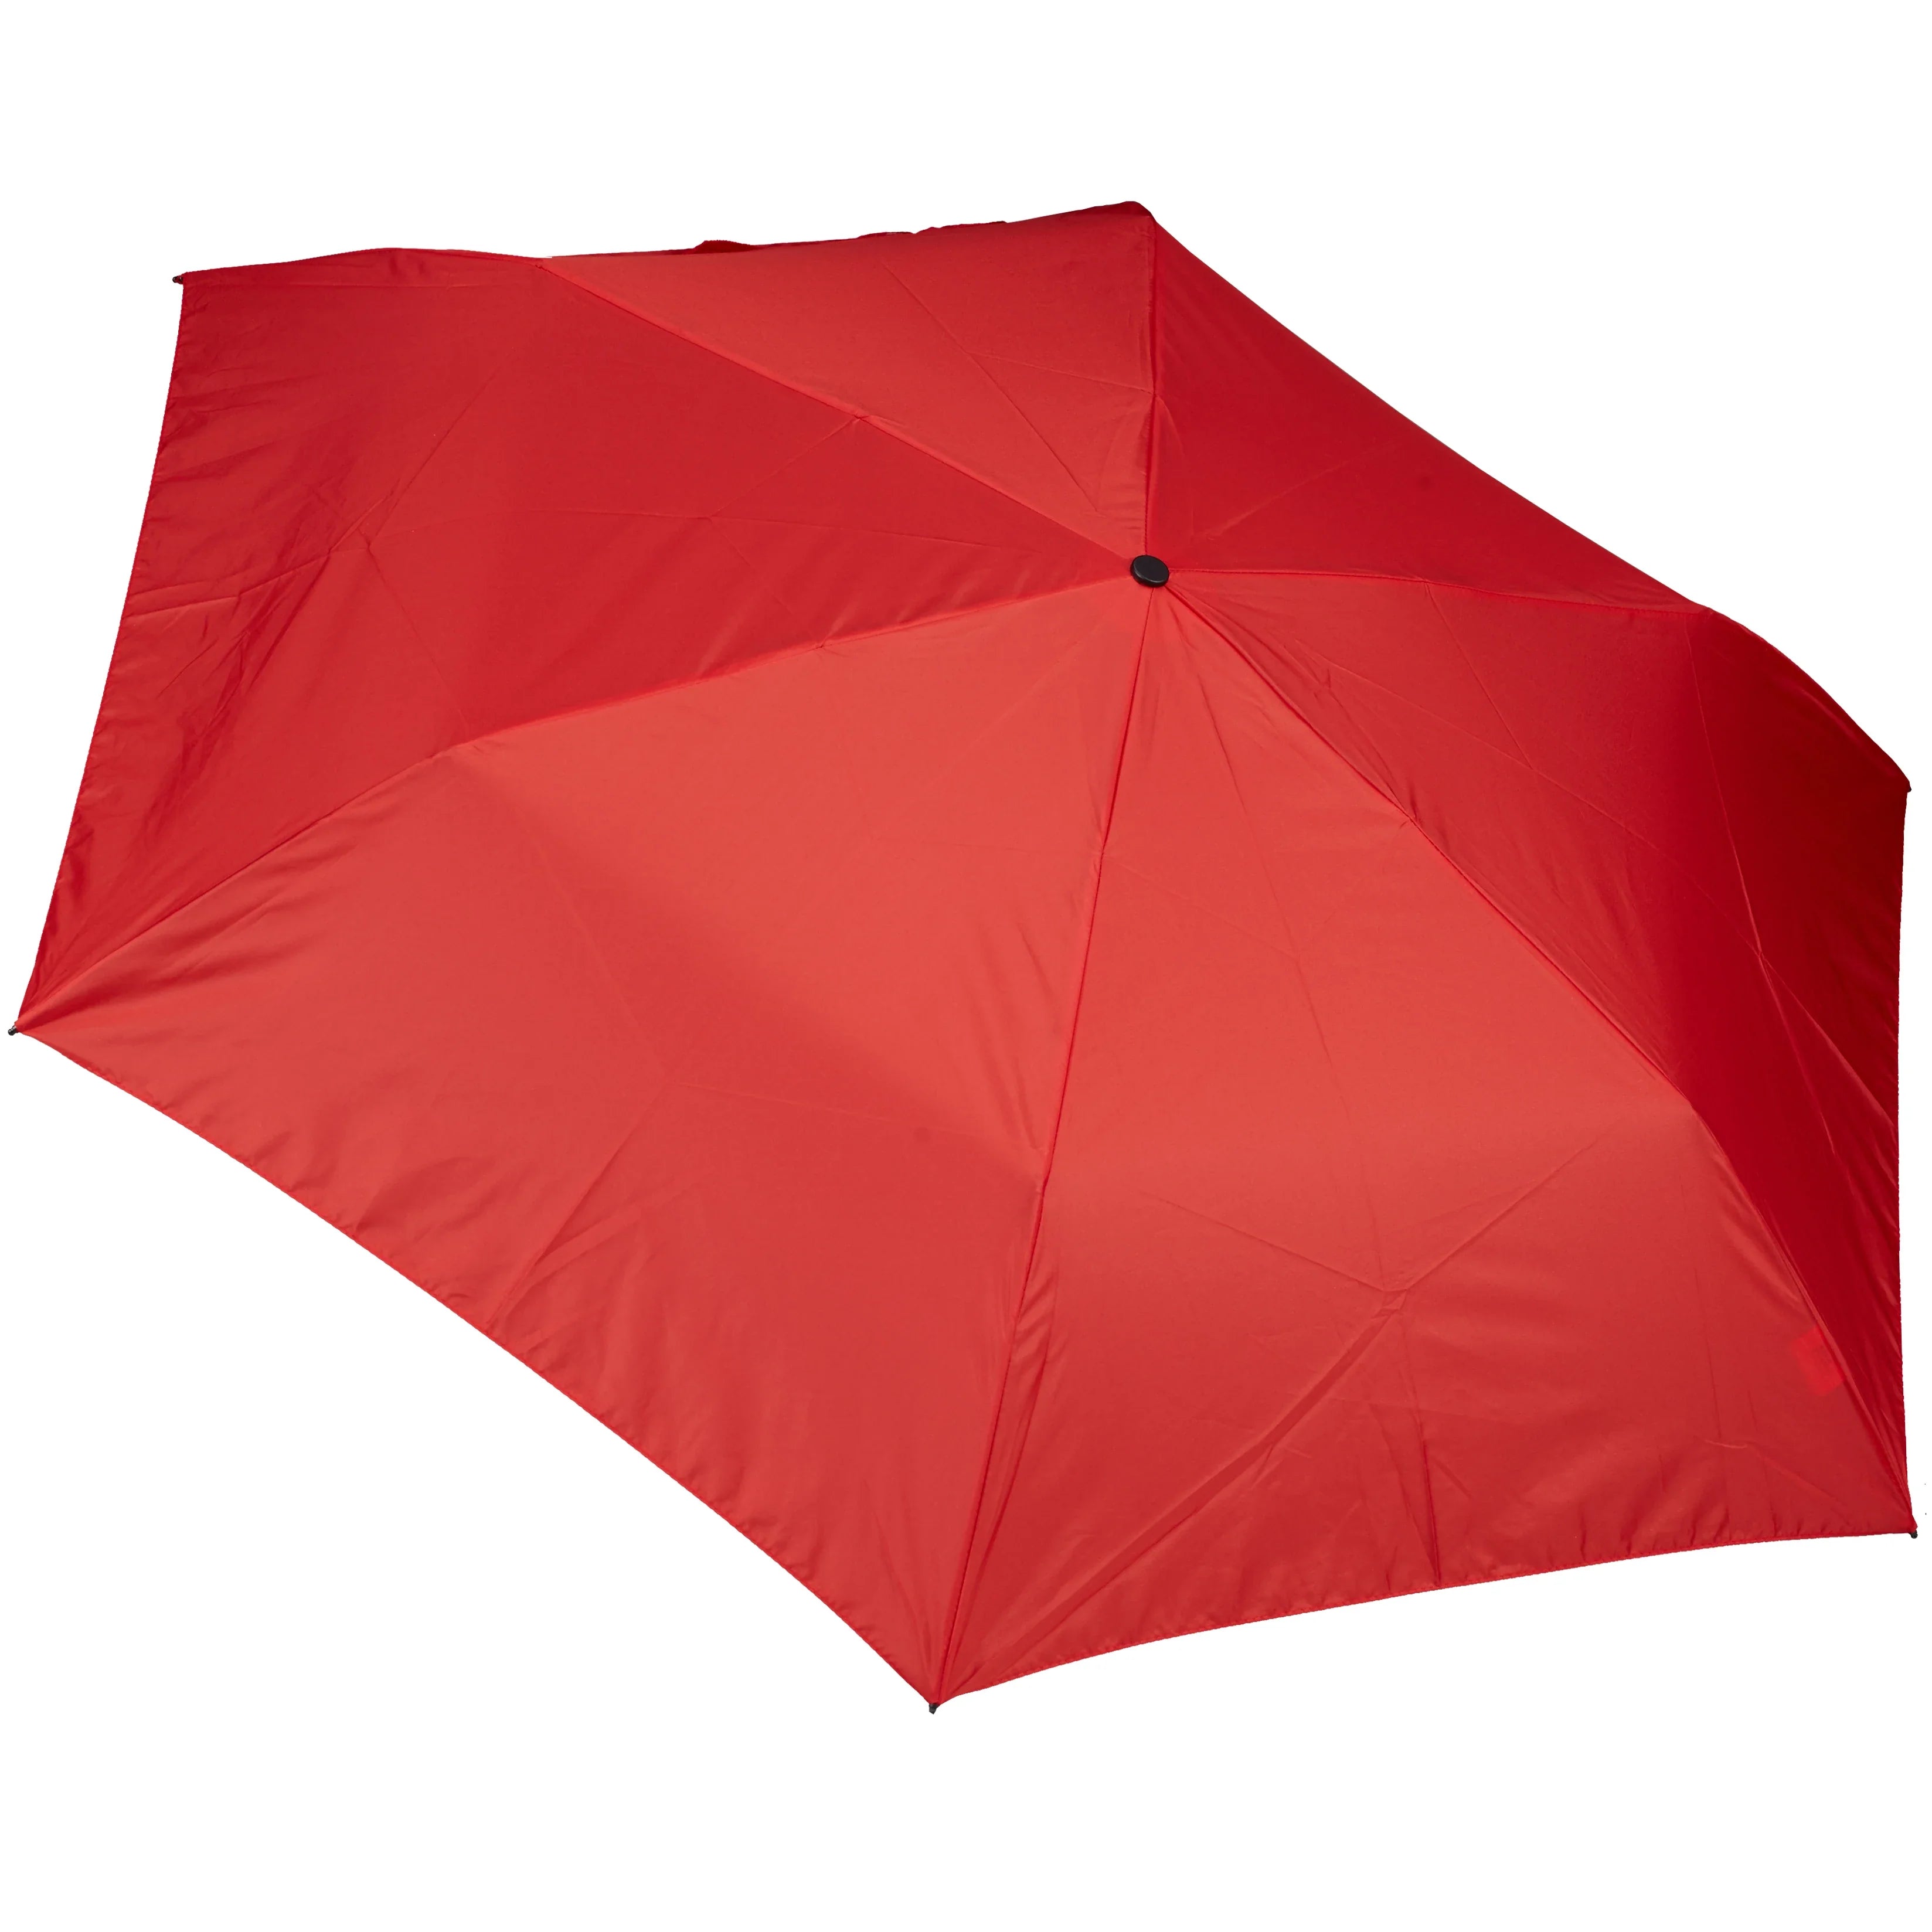 Doppler pocket umbrellas Zero99 black cm - 21 pocket umbrella